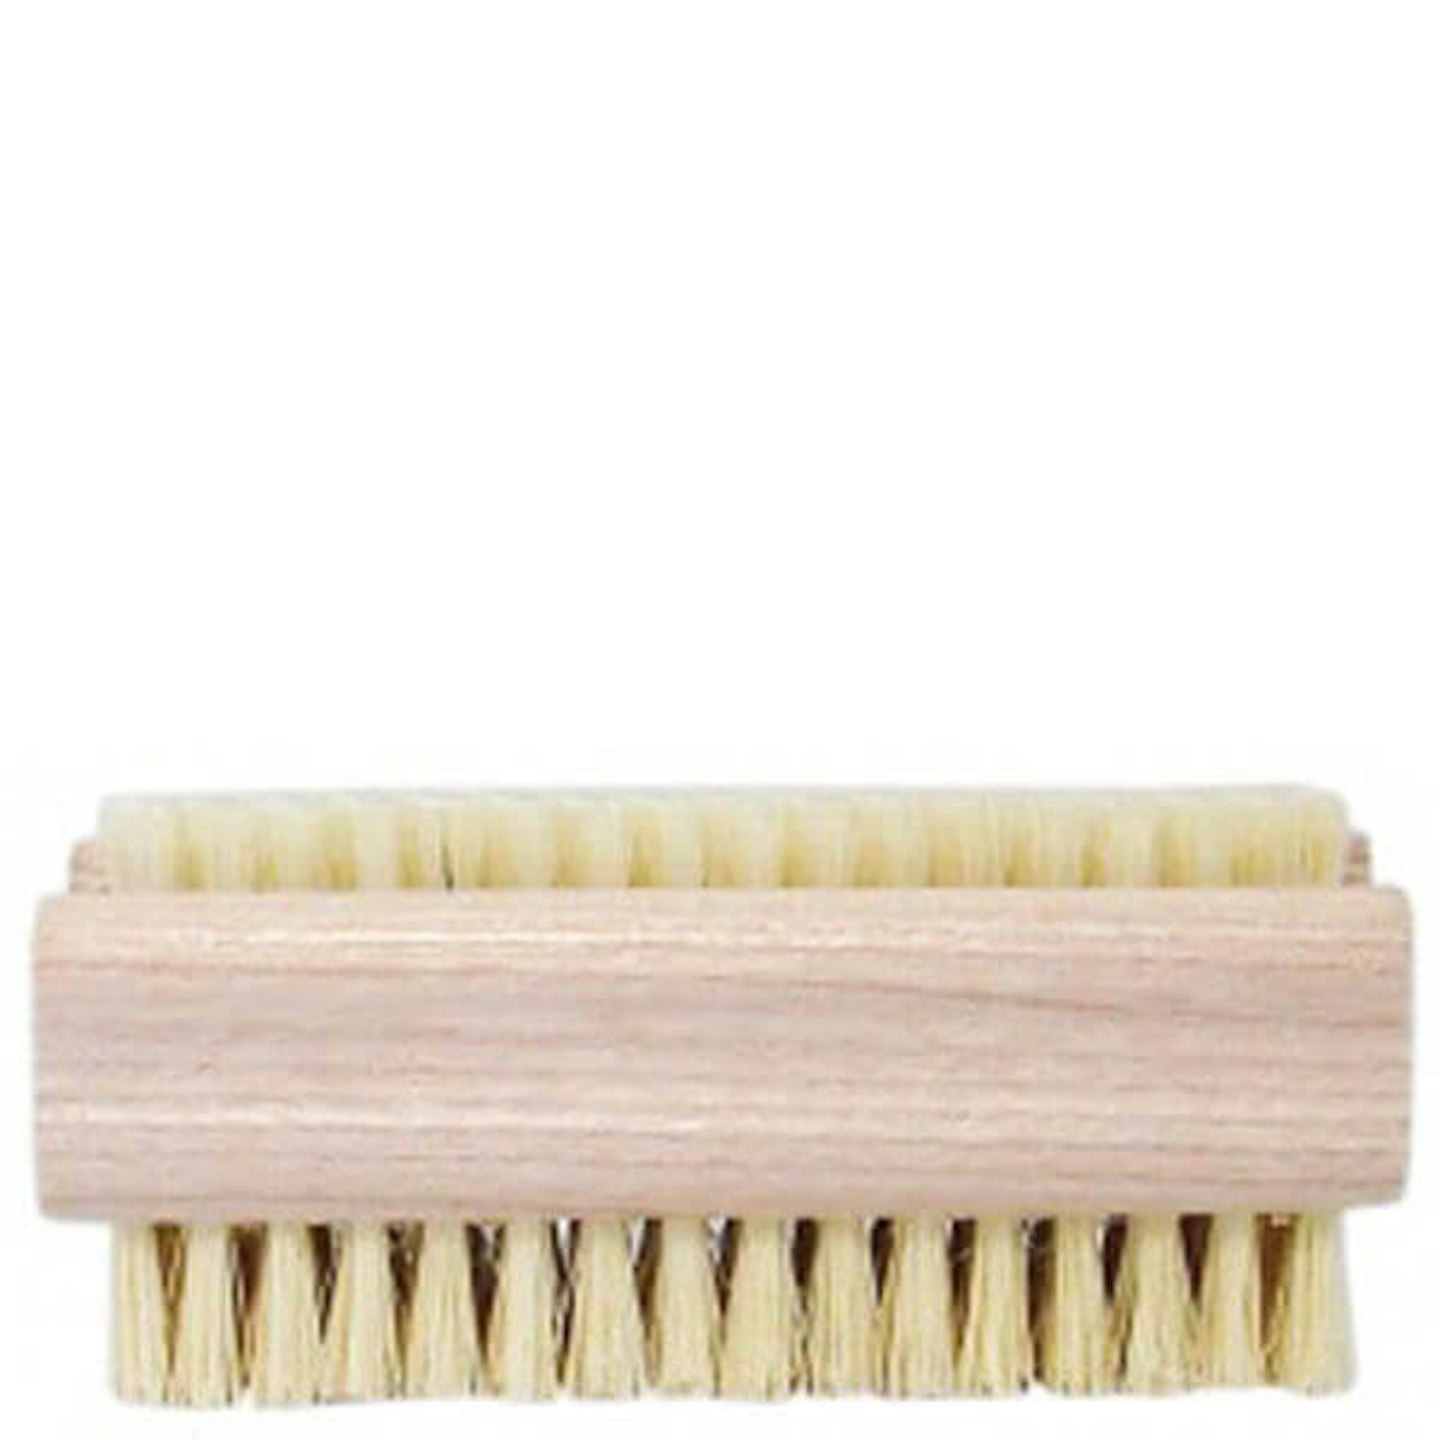 Hydrea London Beech Wood Nail Brush With Sisal Bristles, £3.50